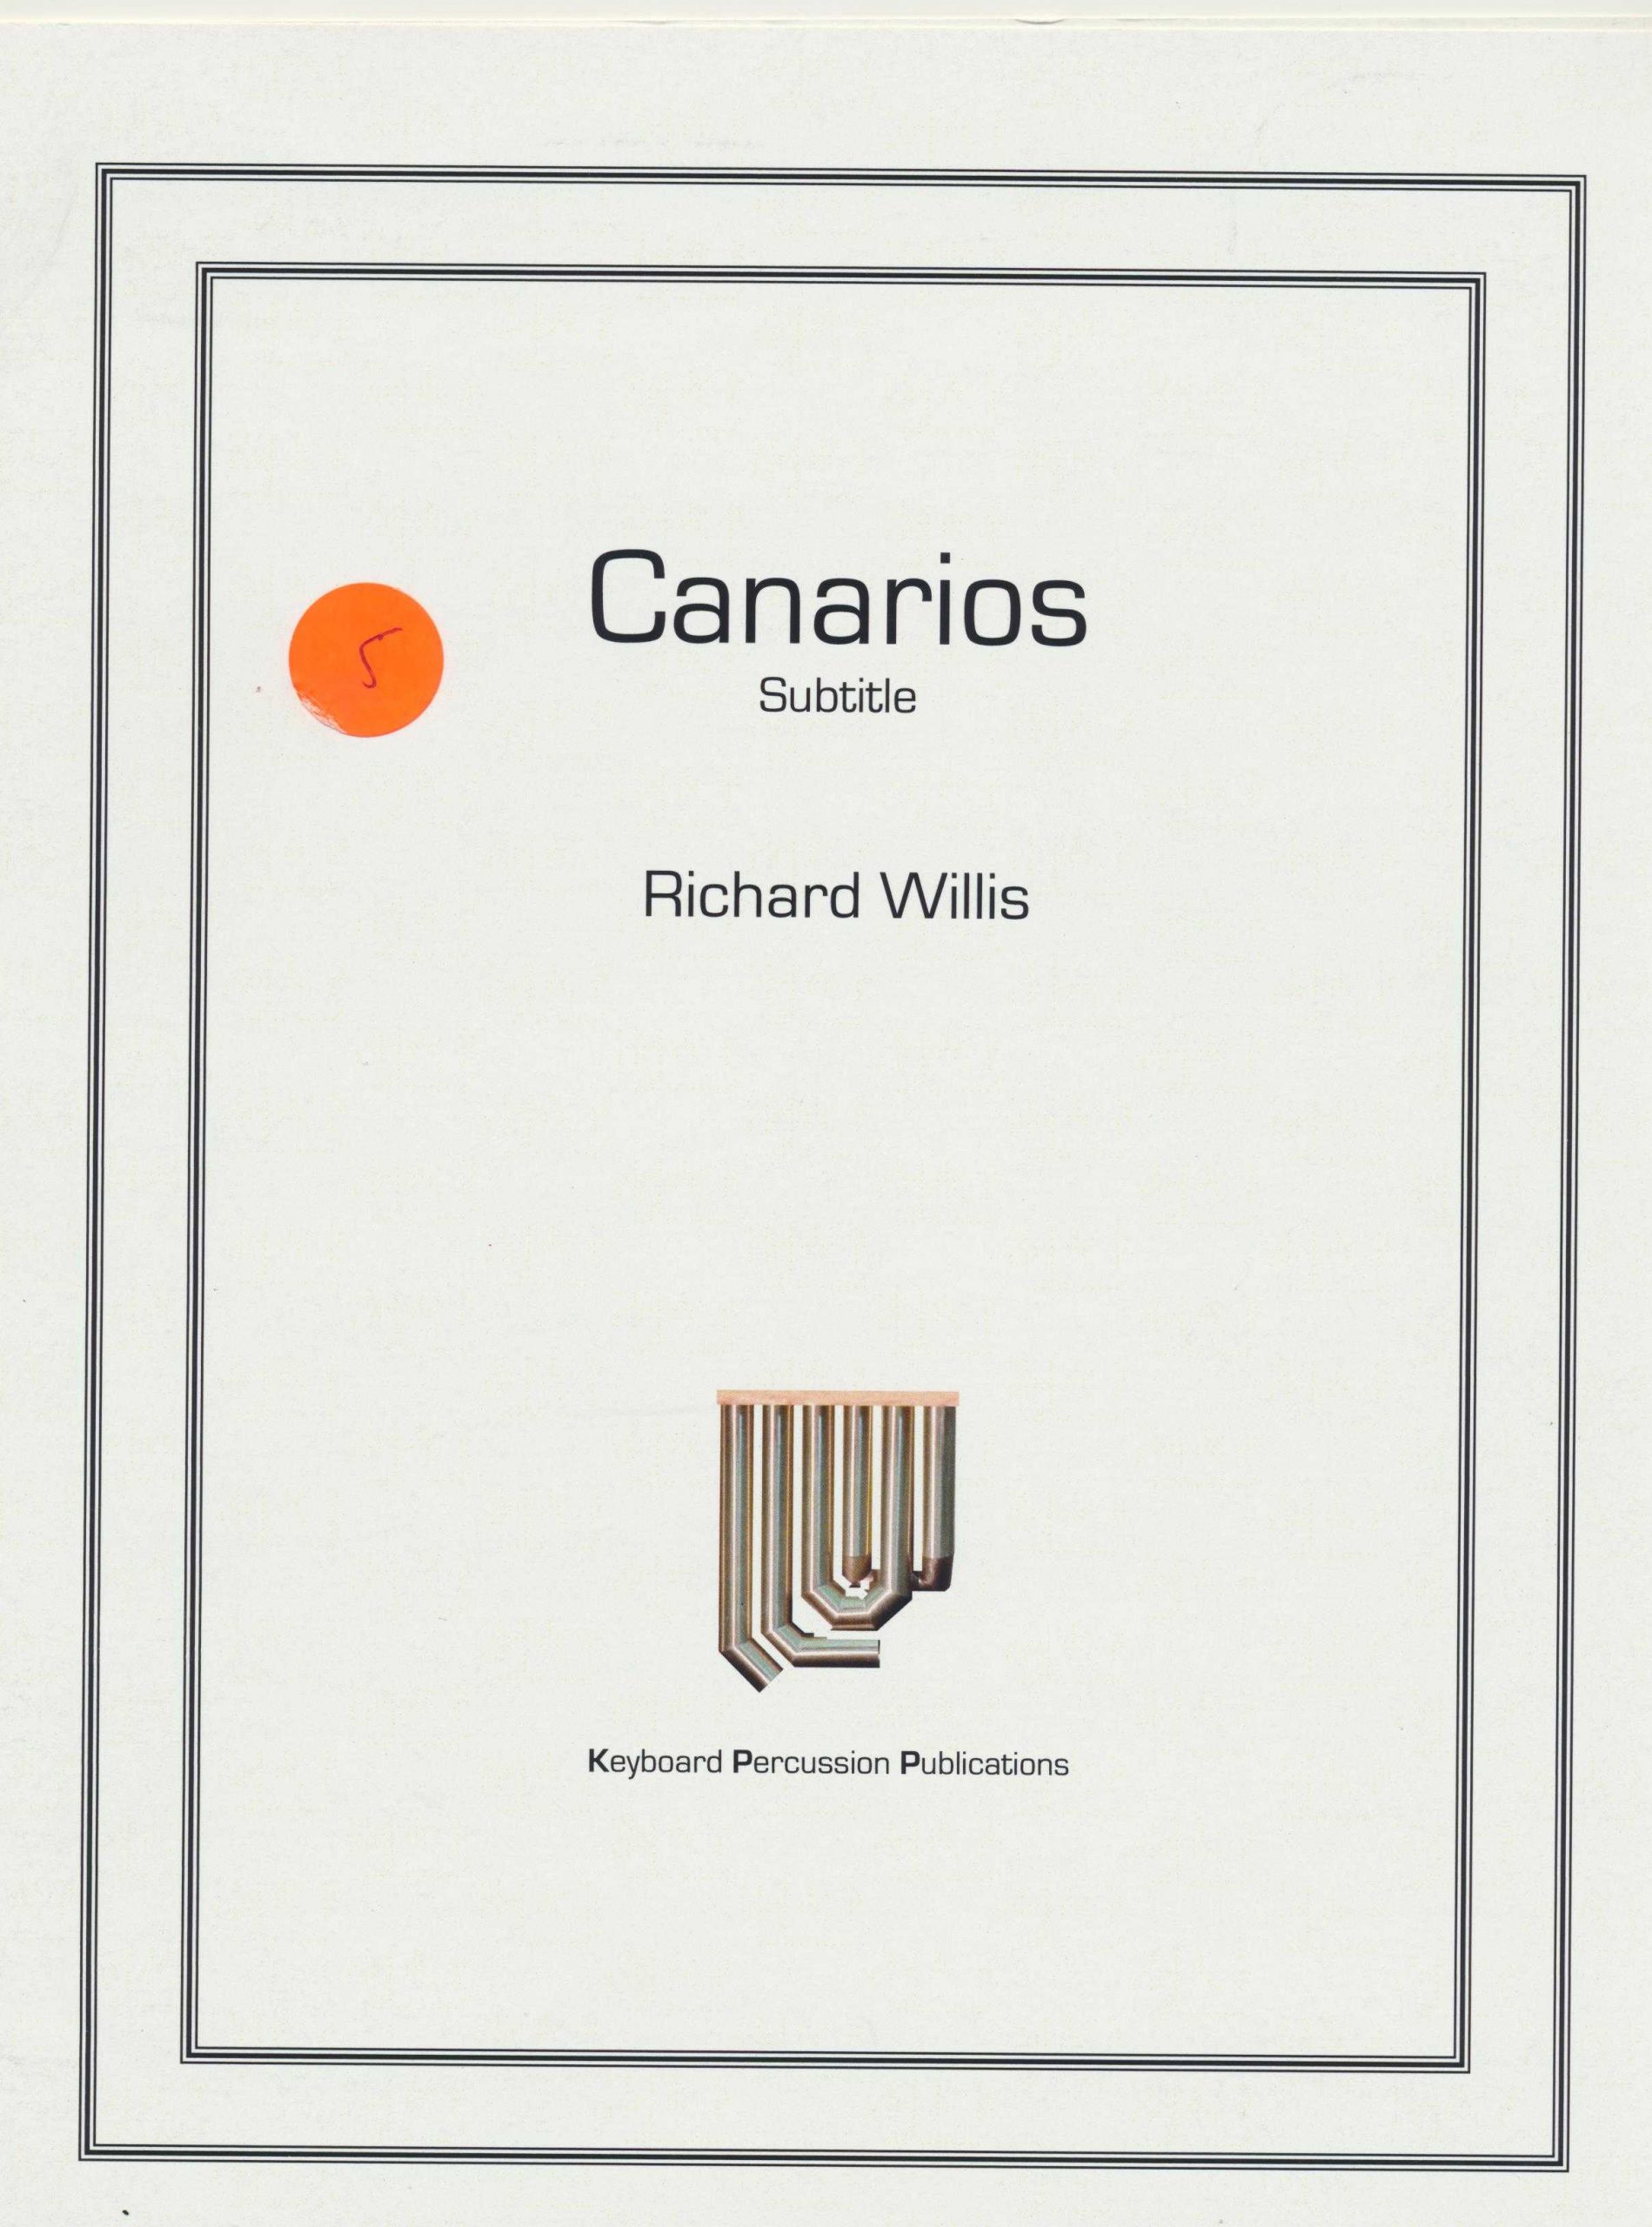 Canarios by Richard Willis